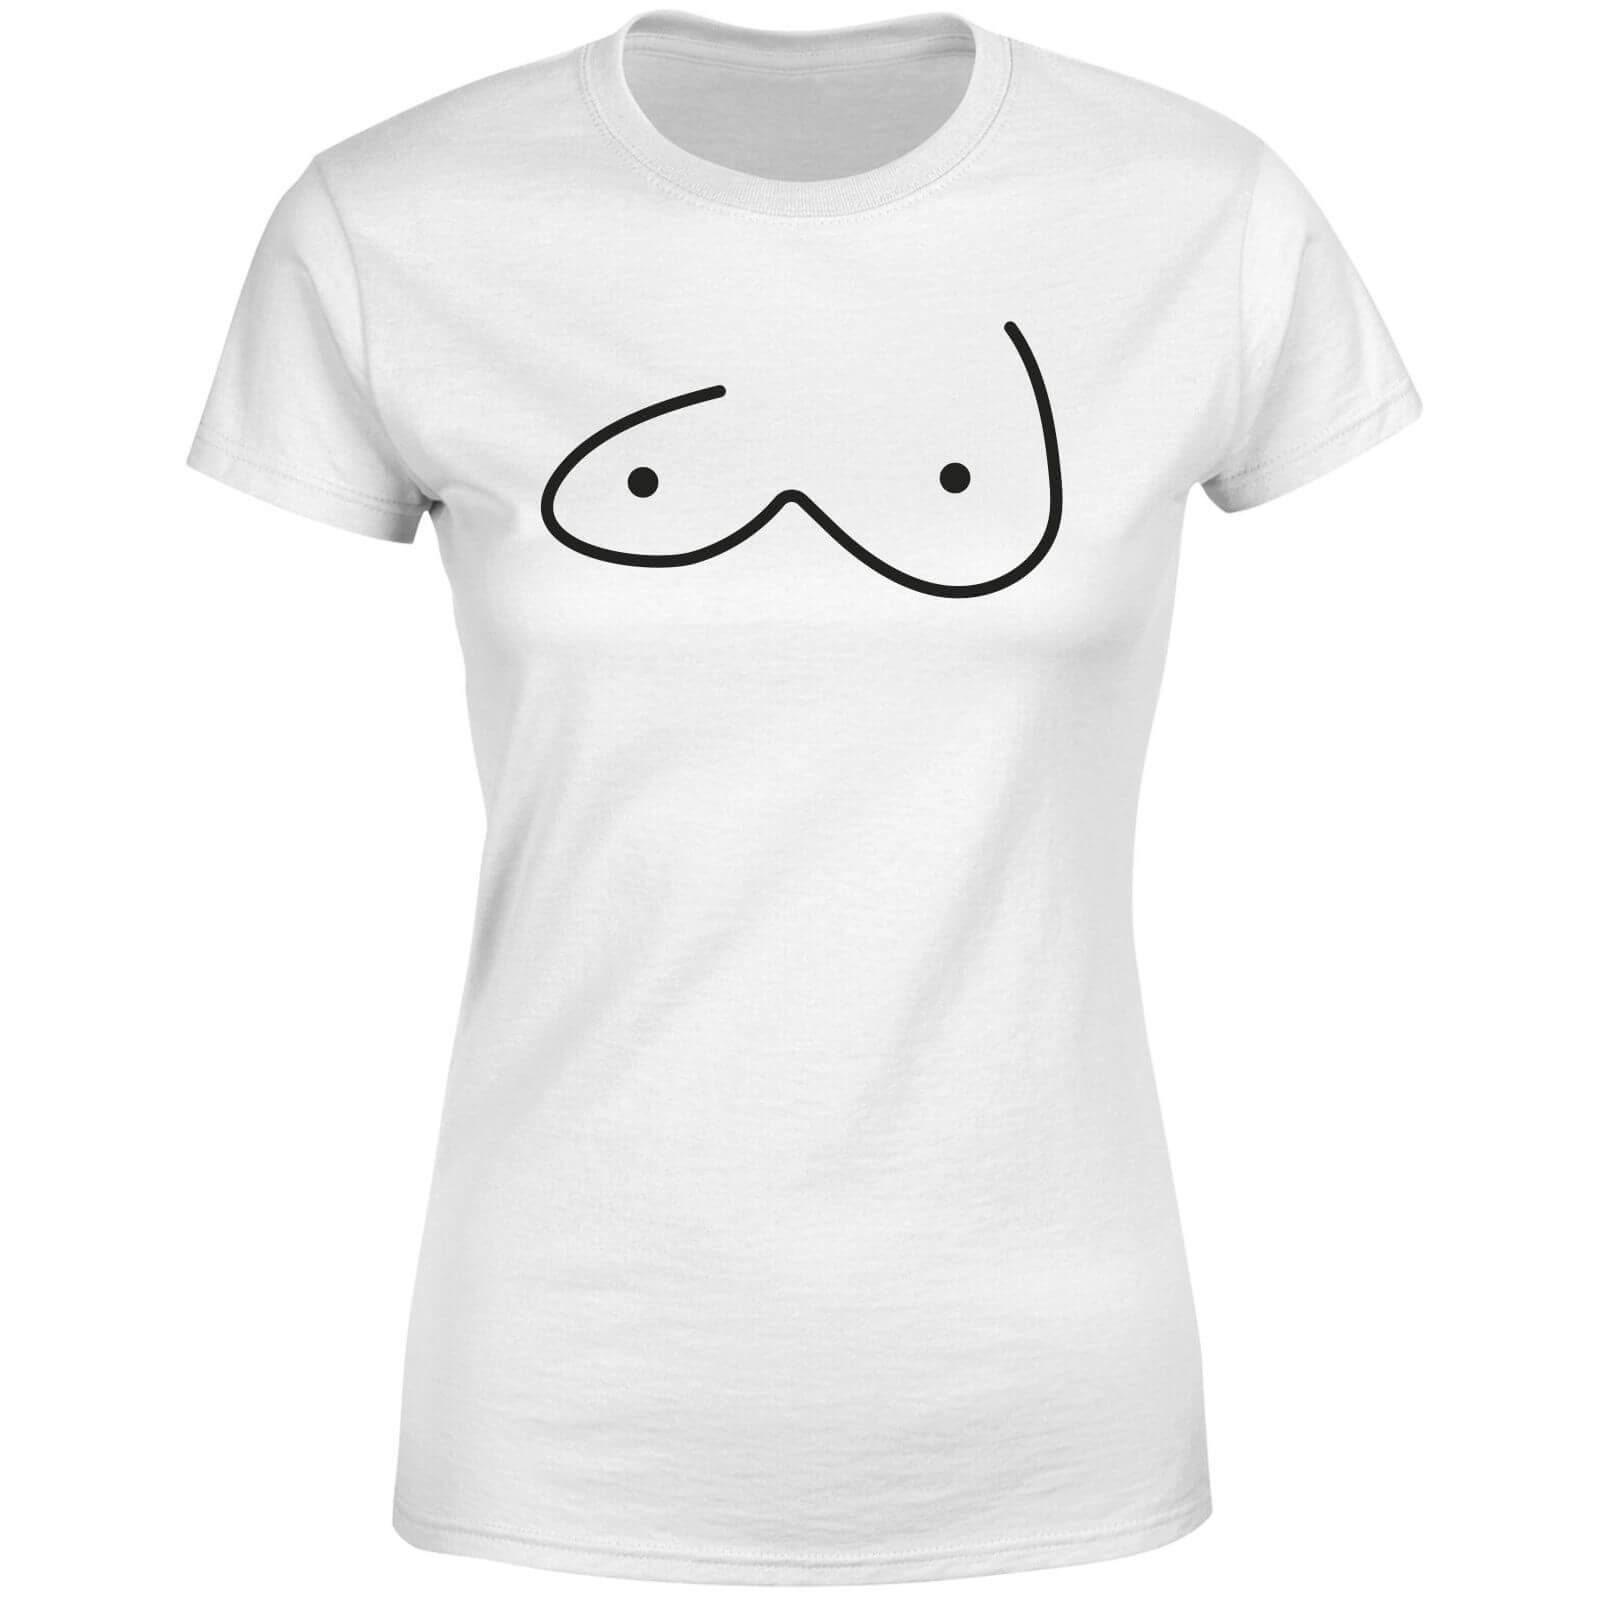 Wonky Bazookas Women's T-Shirt - White - XS